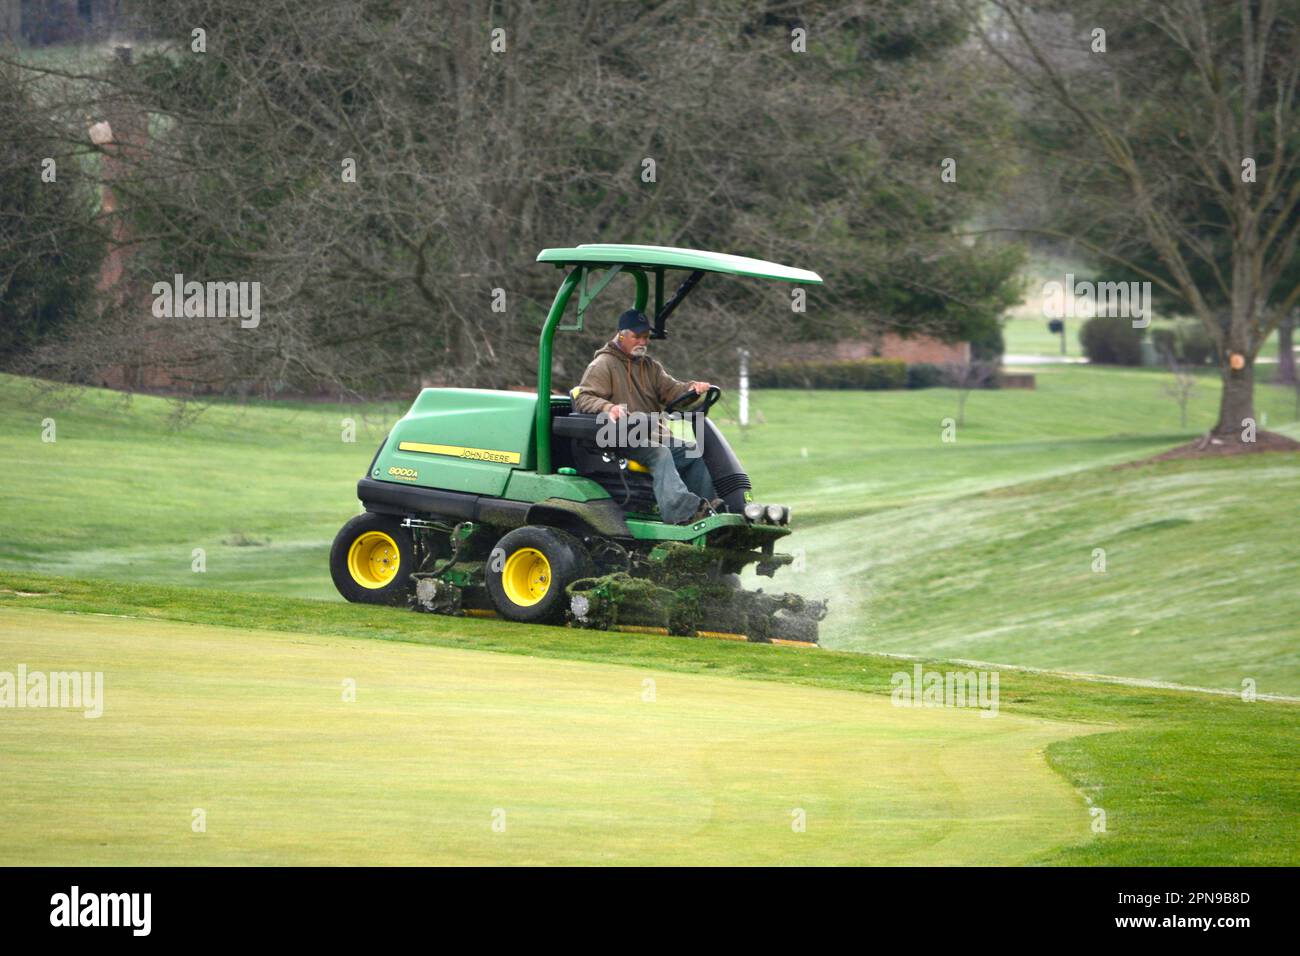 A man on a riding mower mows the fairway of a golf course in Abingdon, Virginia Stock Photo